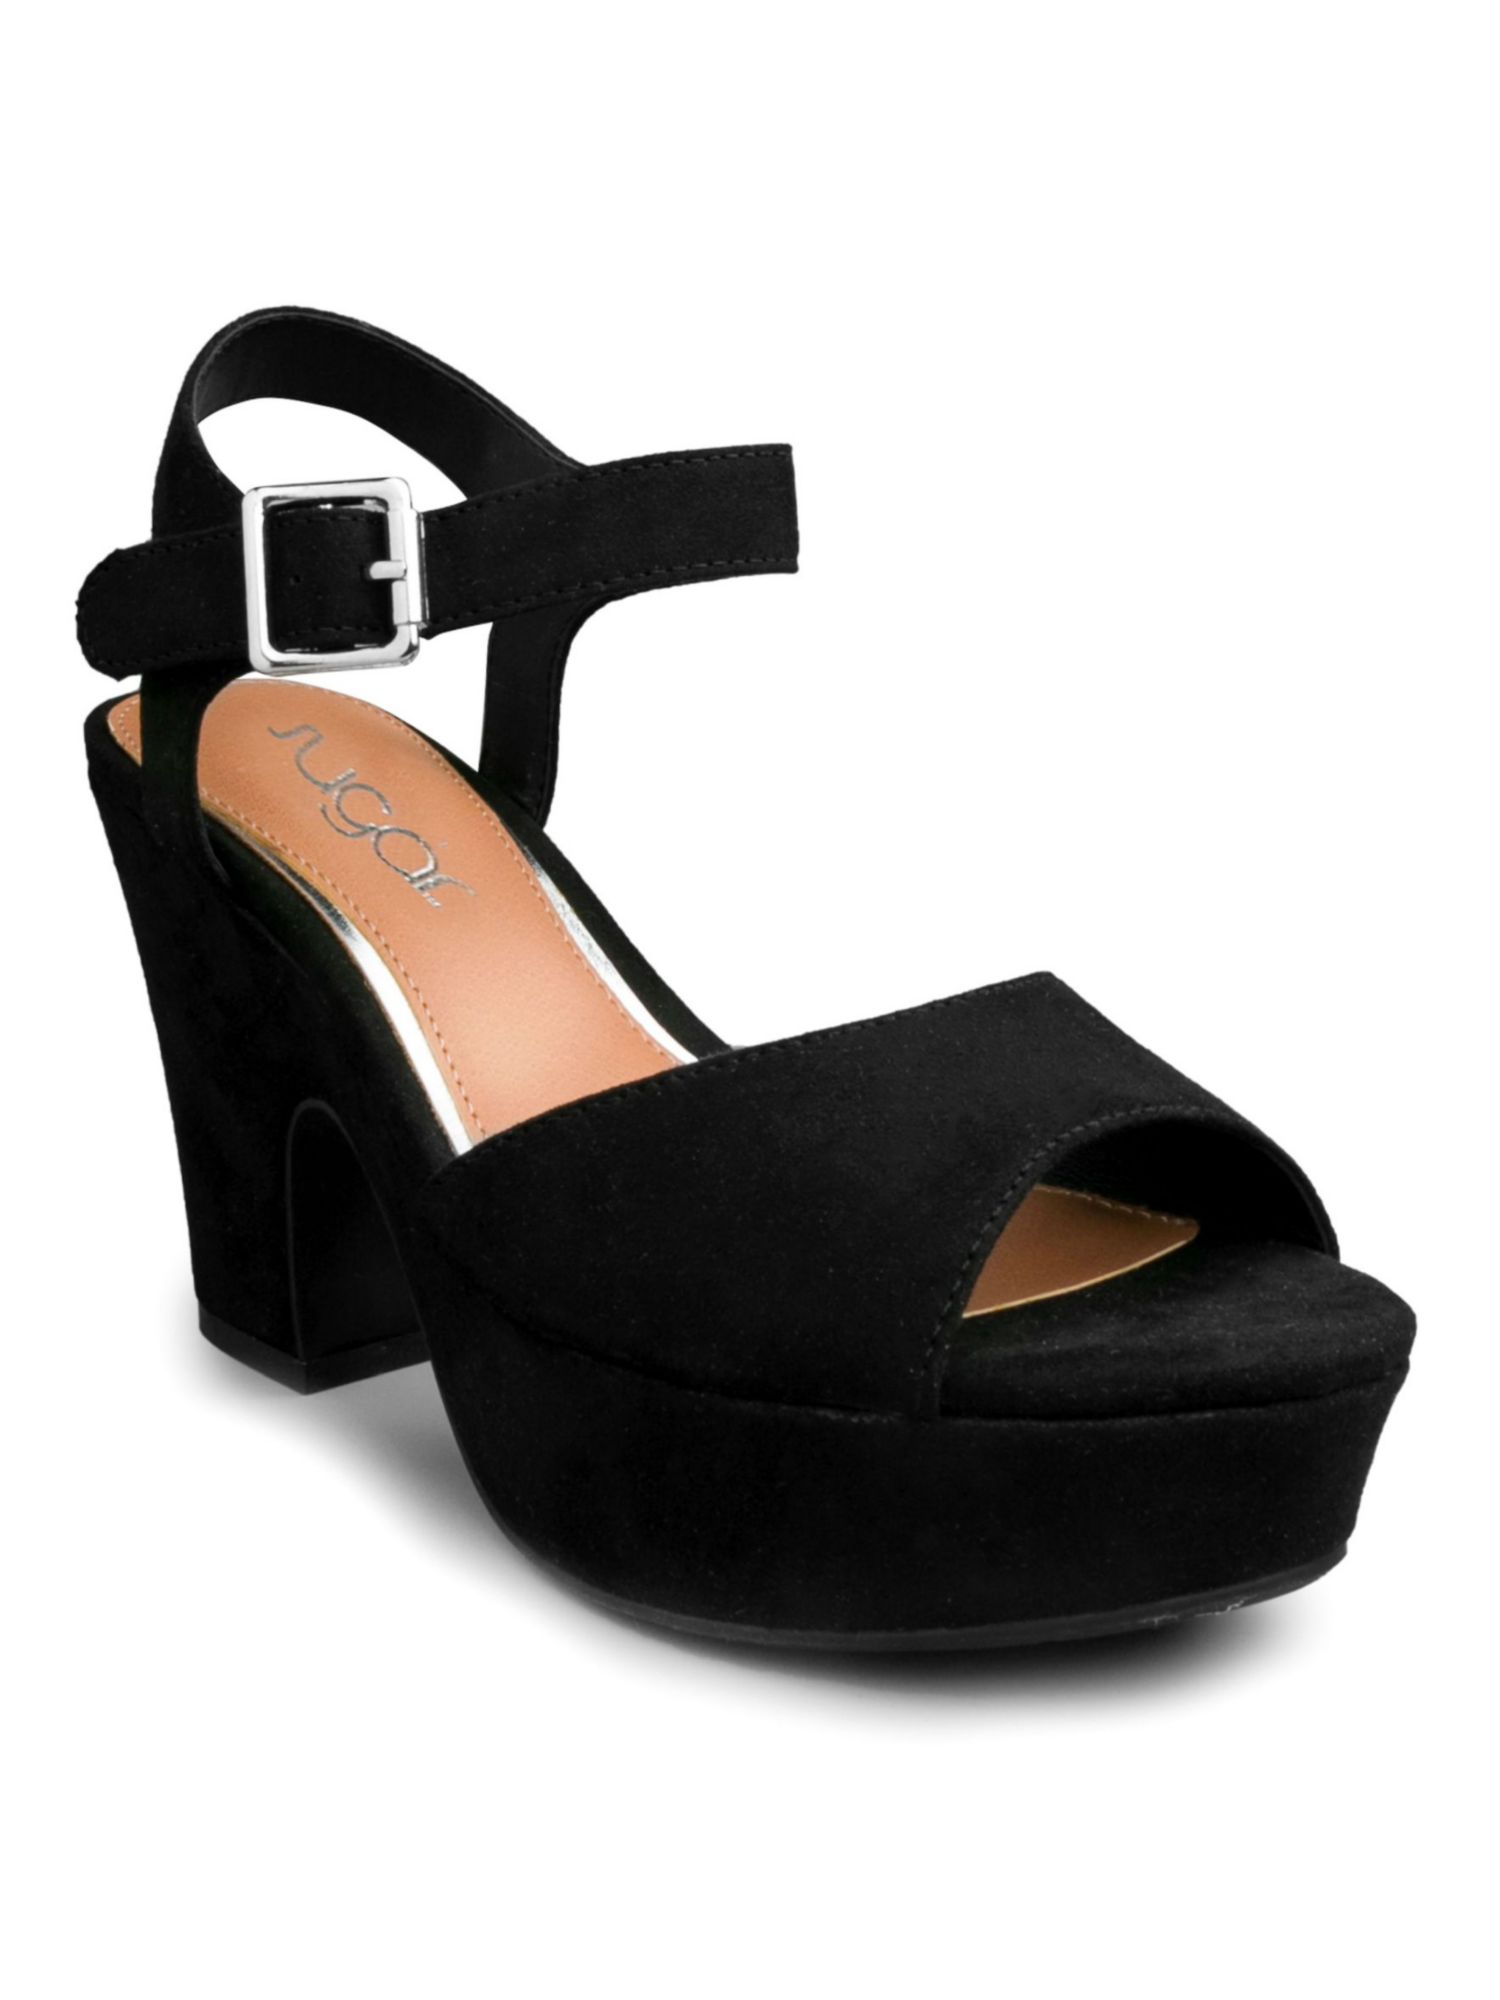 SUGAR Womens Black Animal Print Peep Toe Block Heel Buckle Dress Sandals Shoes 9.5